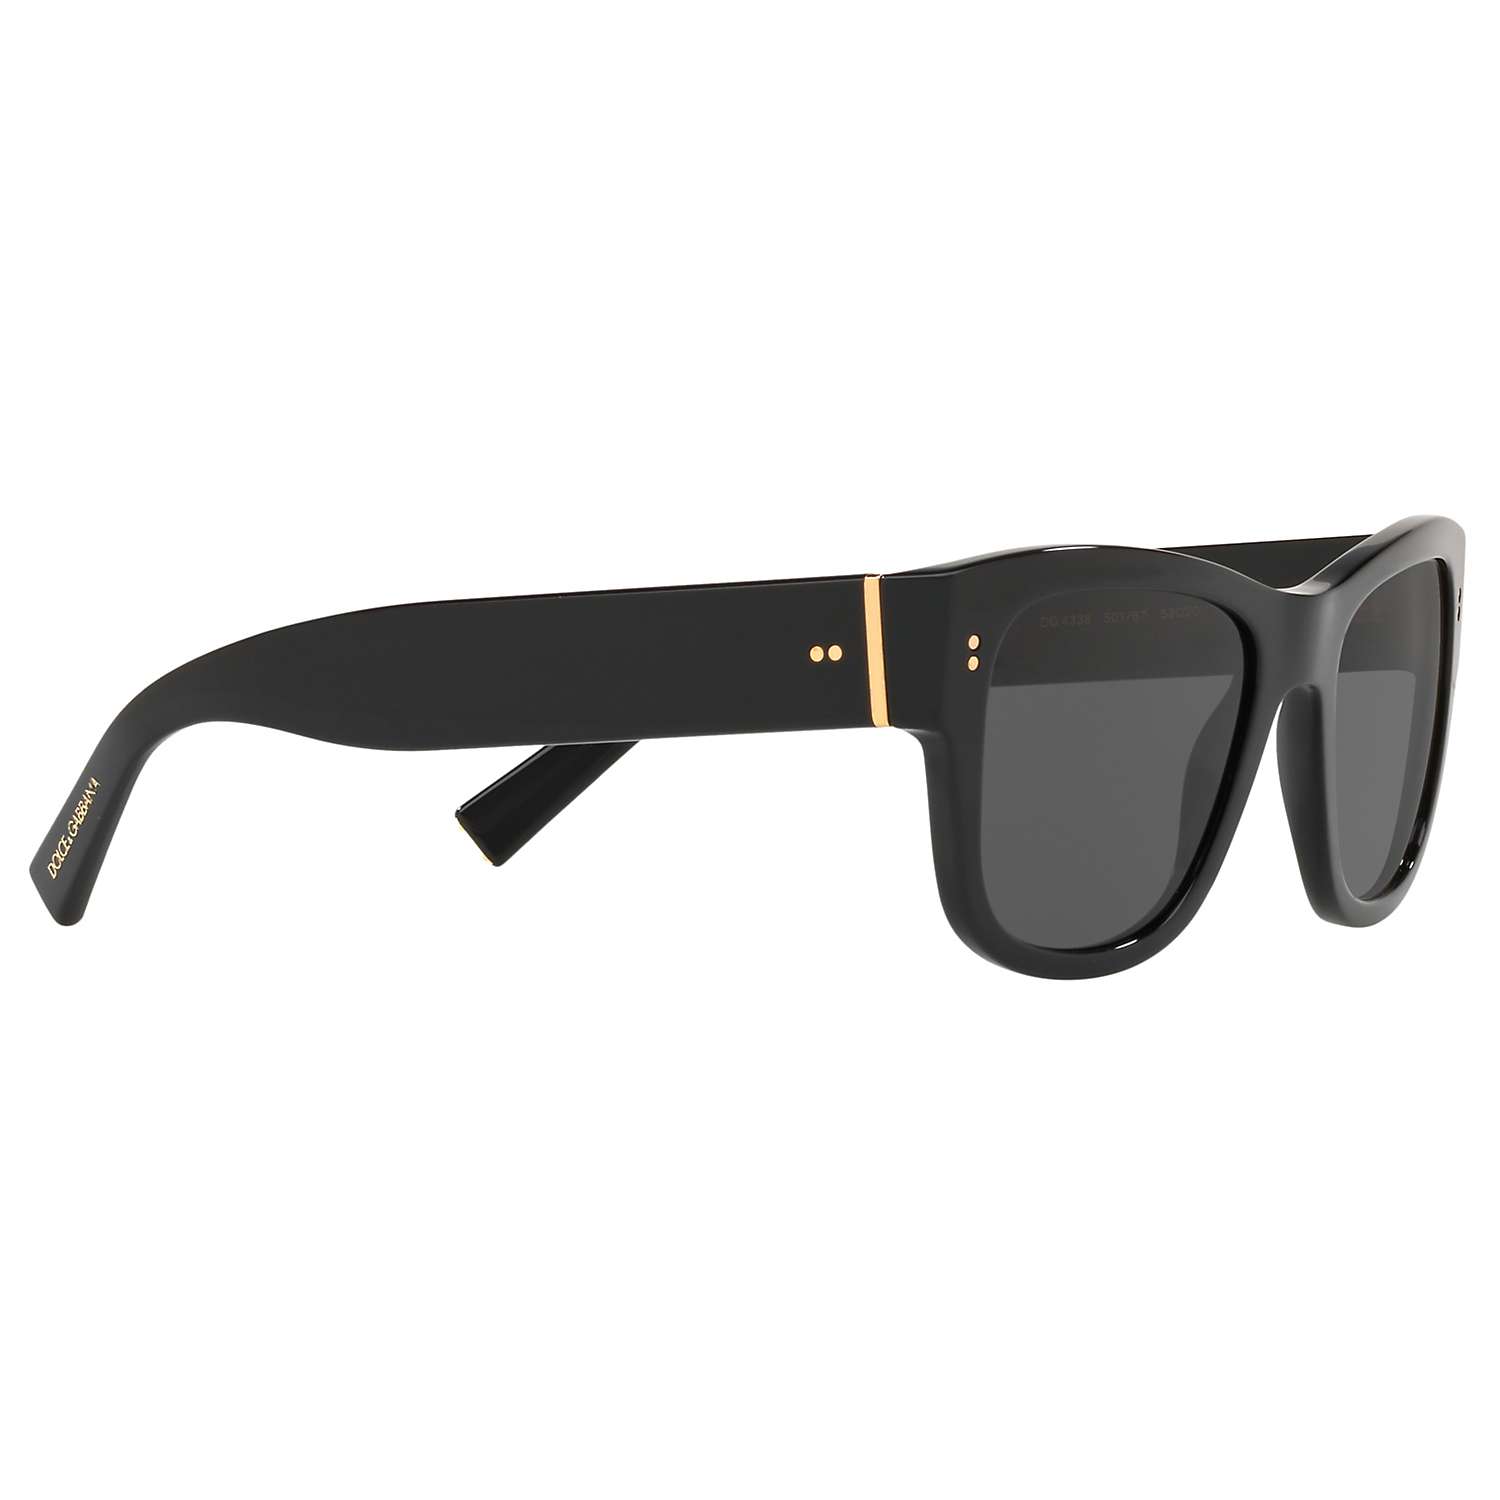 Buy Dolce & Gabbana DG4338 Men's Square Frame Sunglasses, Black/Grey Online at johnlewis.com